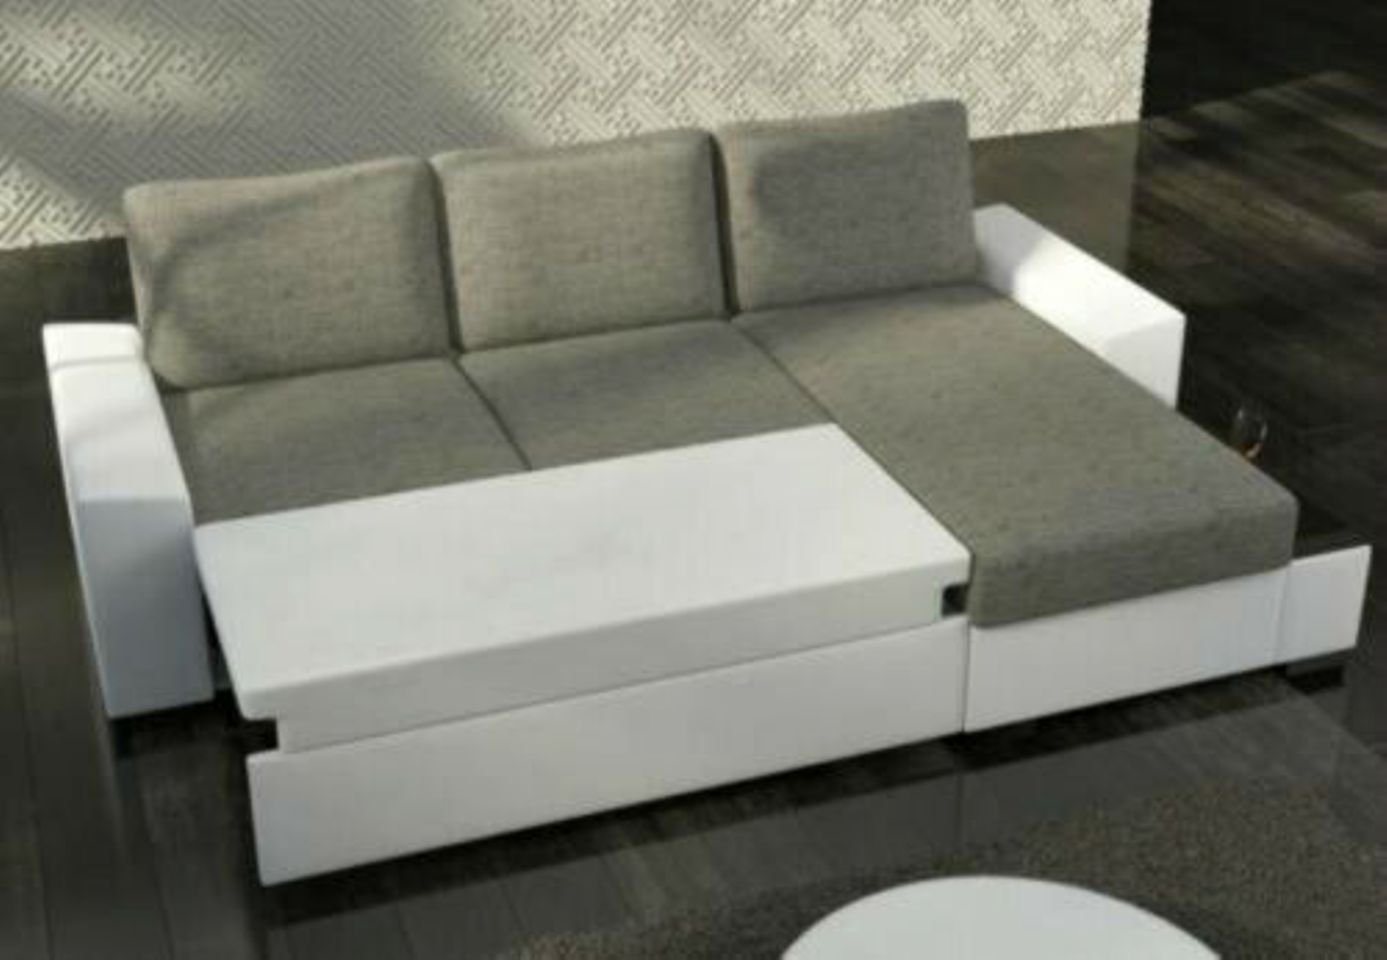 JVmoebel Ecksofa Design Ecksofa Schlafsofa Bettfunktion Sofa Couch Leder Polster, Mit Bettfunktion von JVmoebel